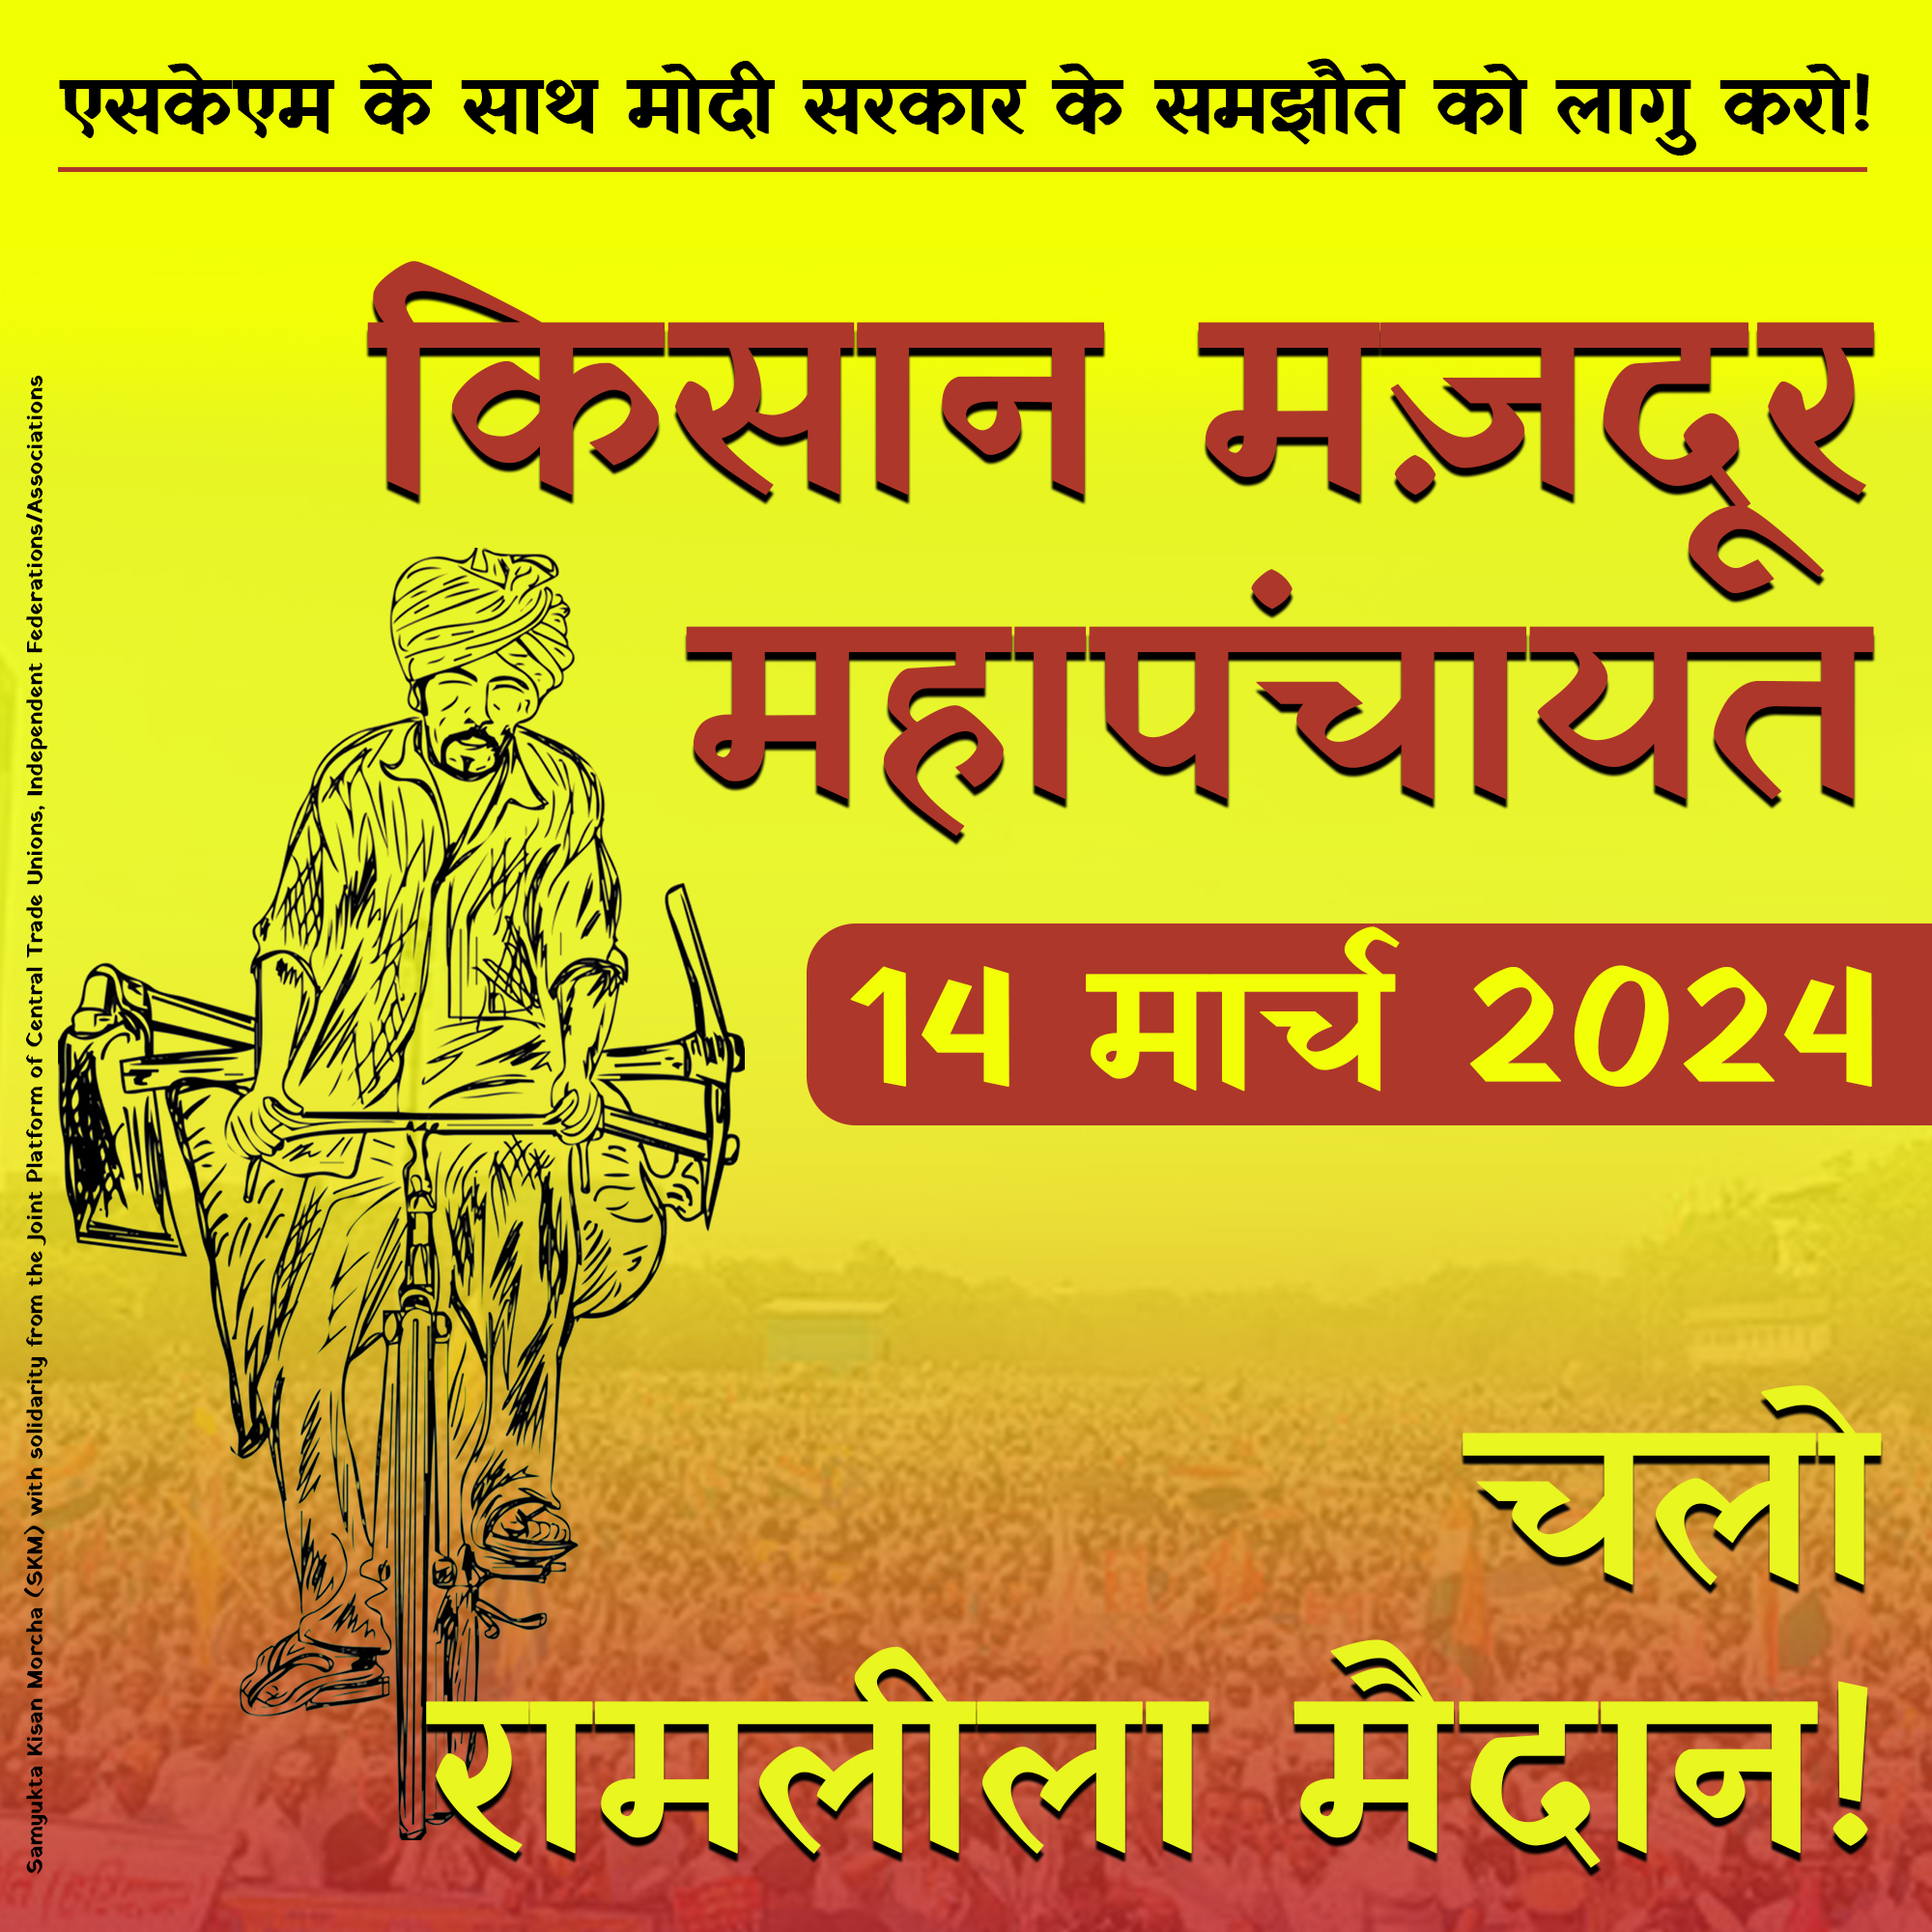 SKM Calls for Massive Mahapanchayat at Ramlila Maidan in Delhi on March 14, Denounces BJP Regime’s Repression on Farmers, and MP Ticket to Ajay Mishra Teni